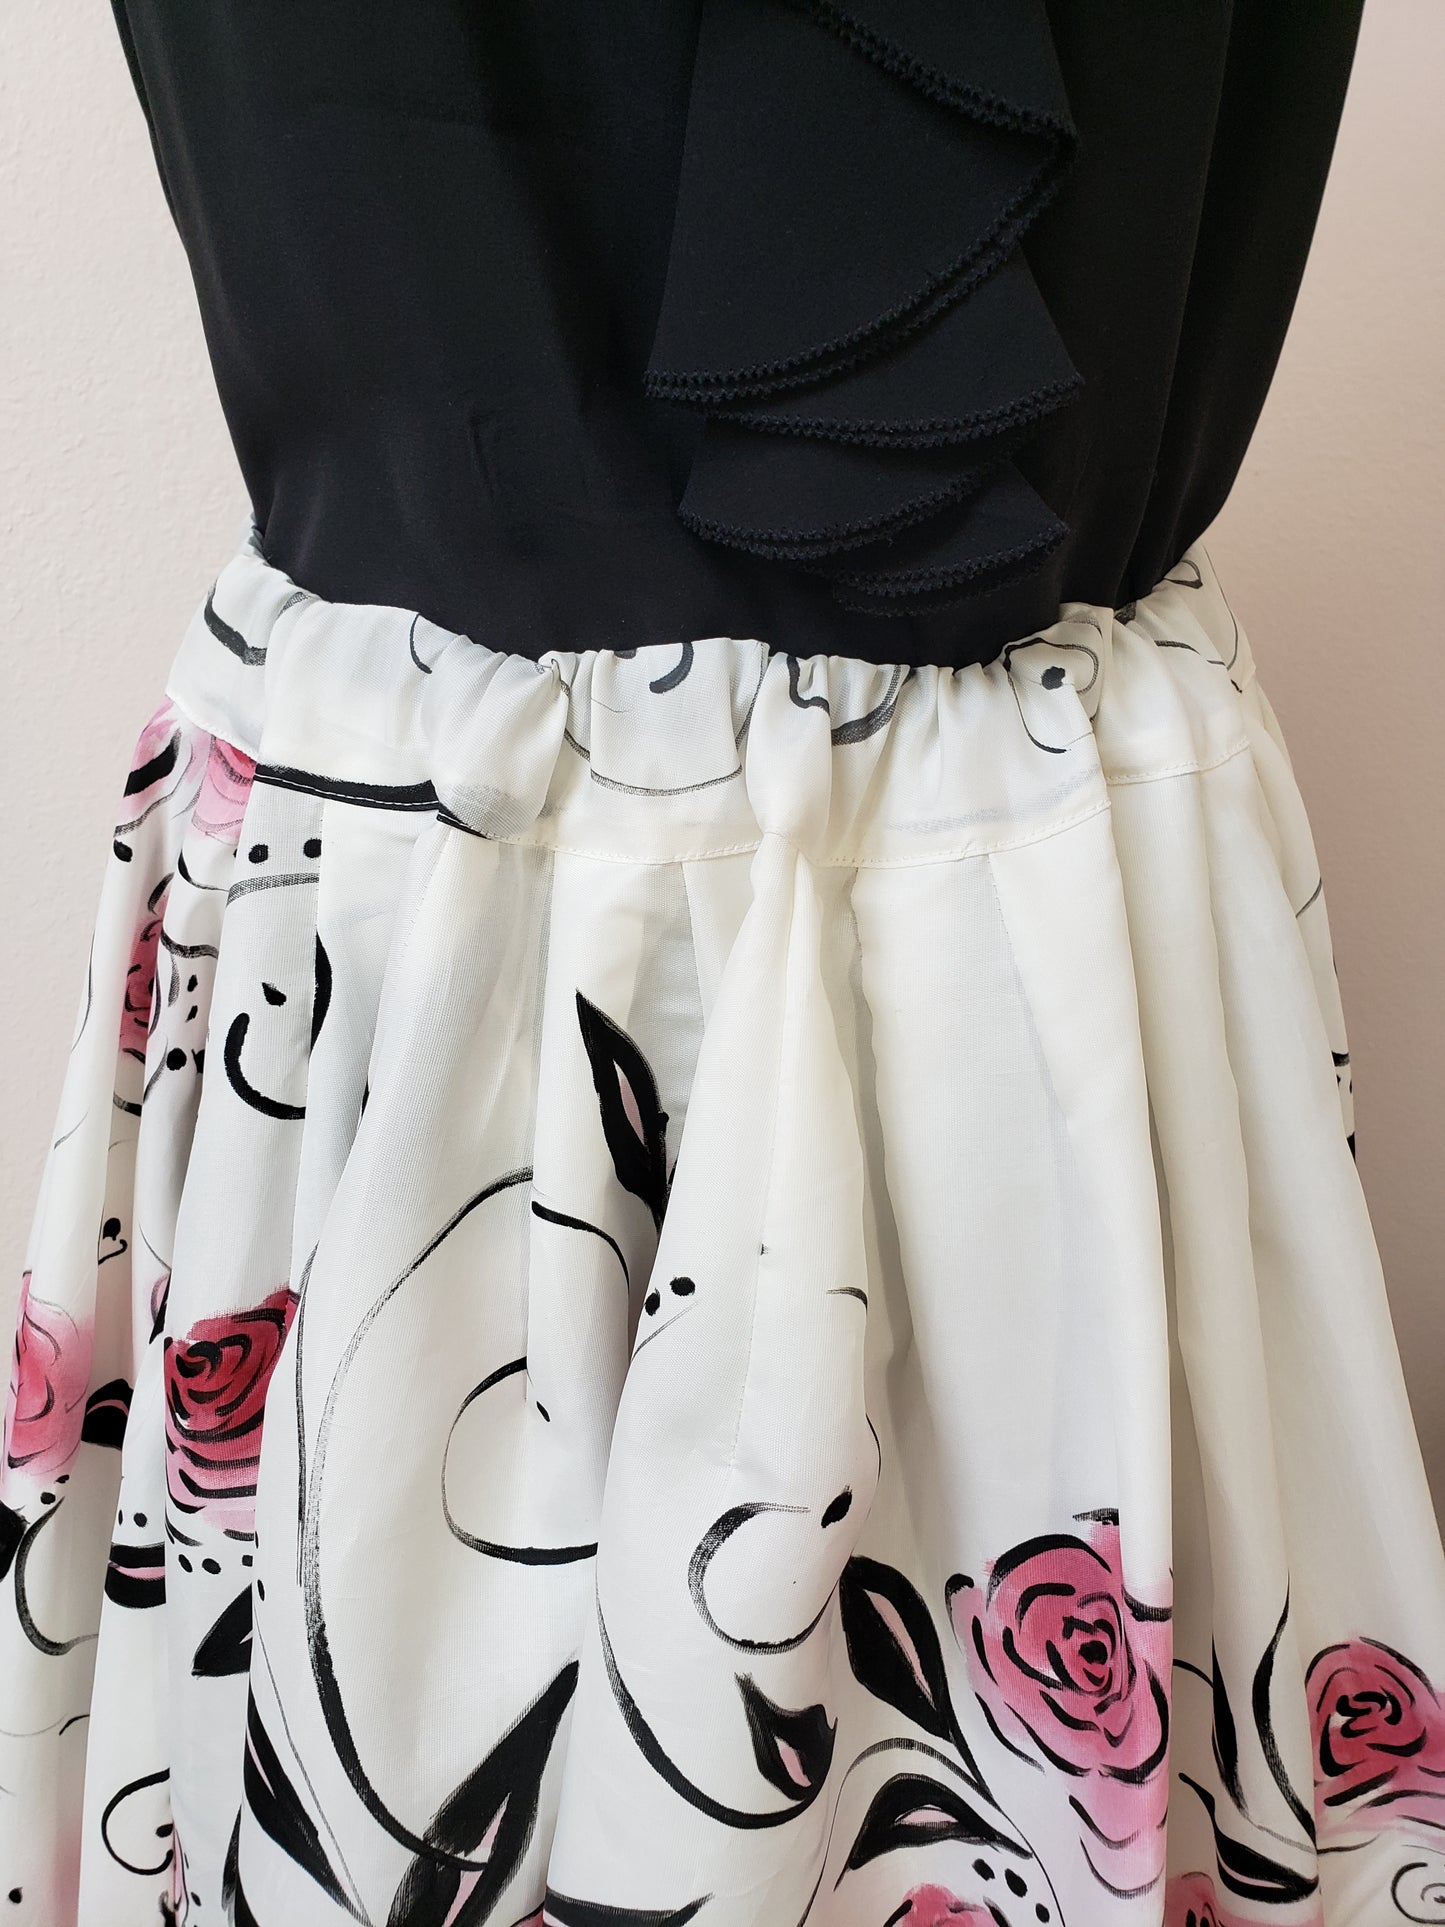 Handpainted floral skirt